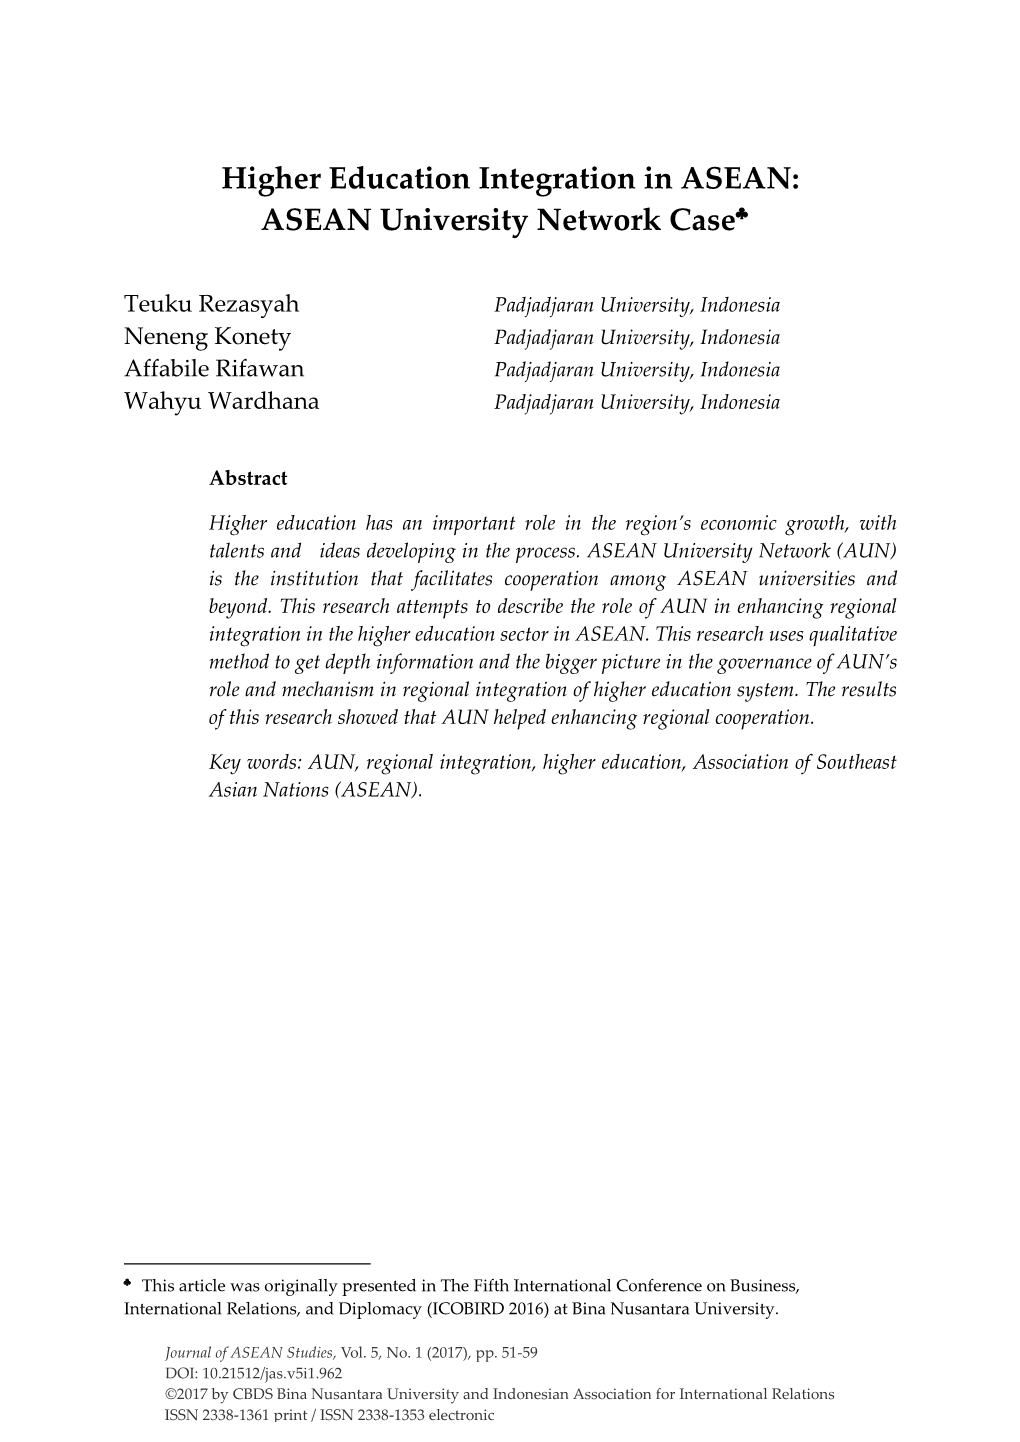 ASEAN University Network Case.1